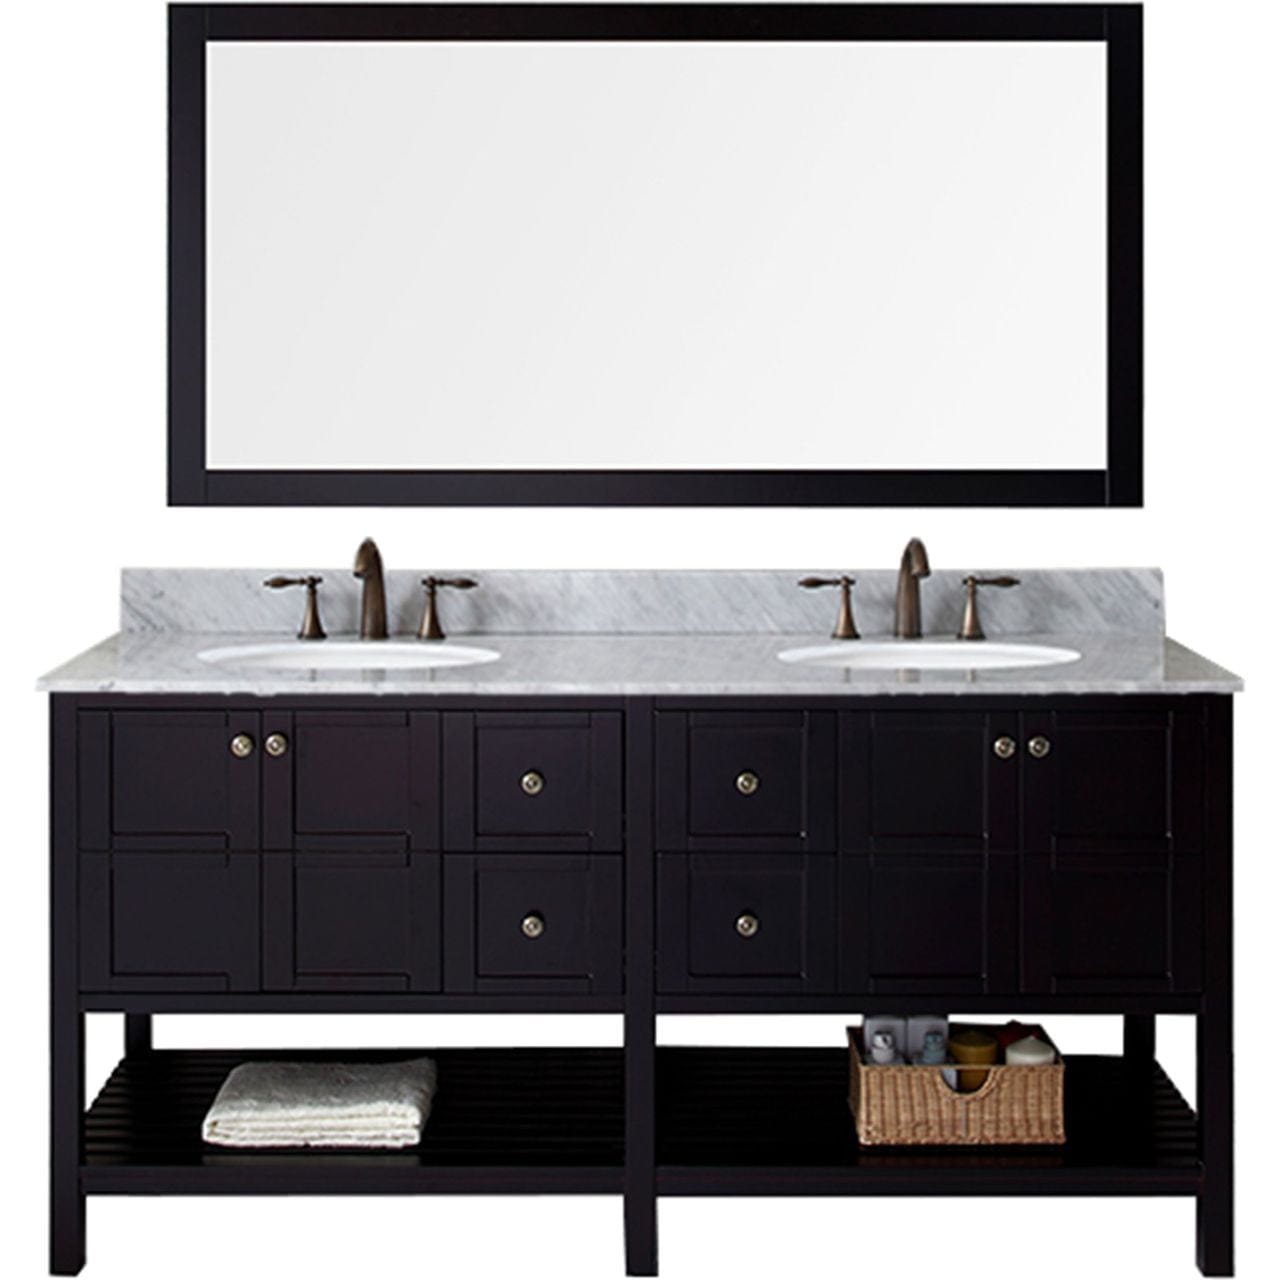 Virtu USA Winterfell 72" Double Bathroom Vanity Set in Espresso